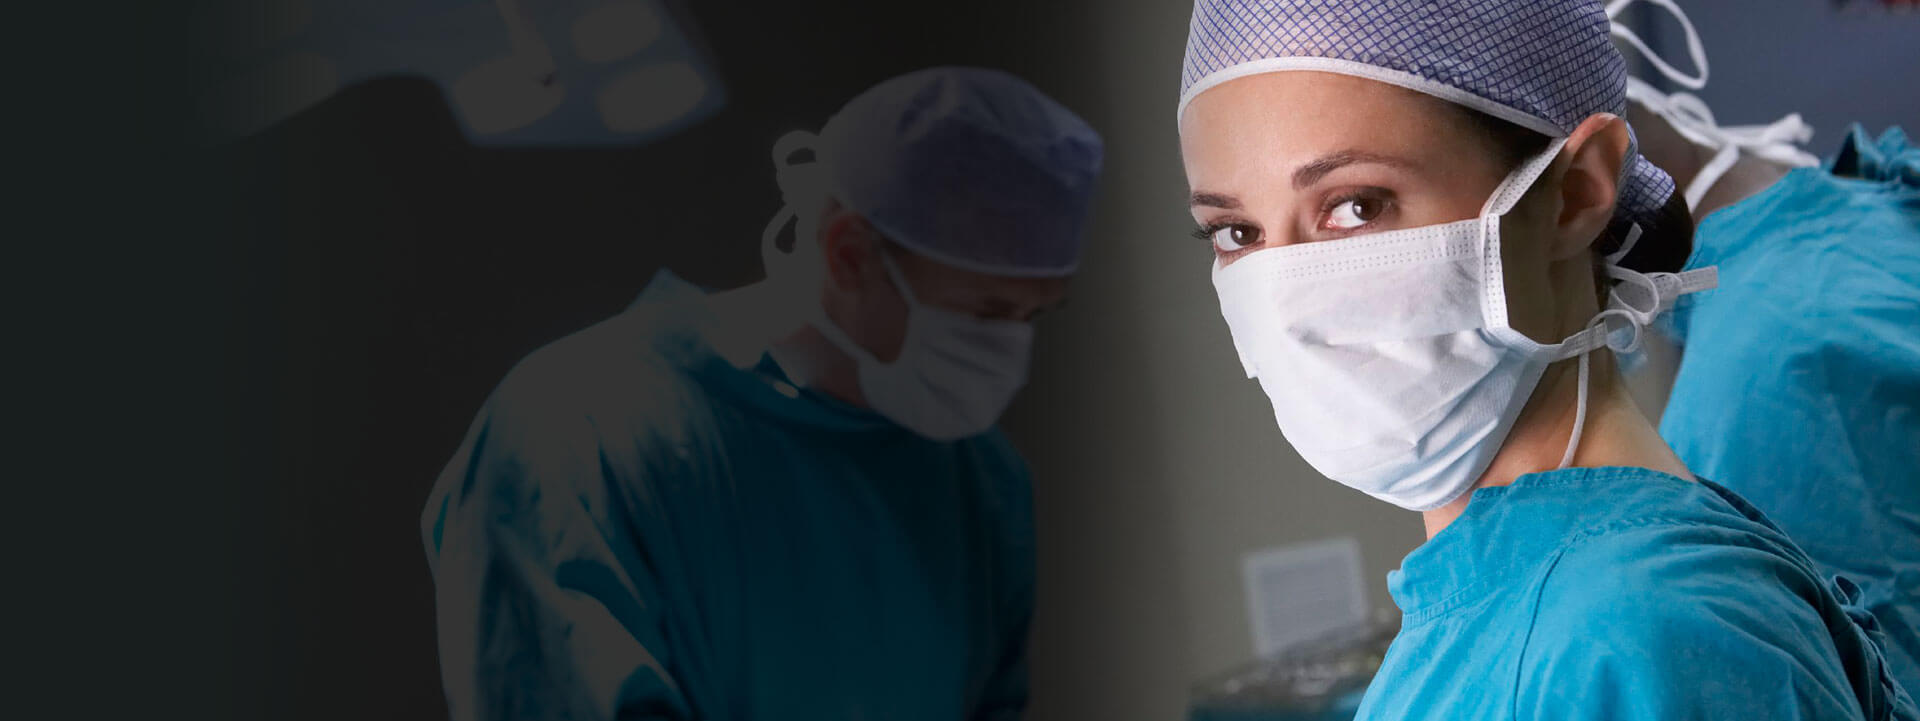 scrub nurse masked up and doing surgery